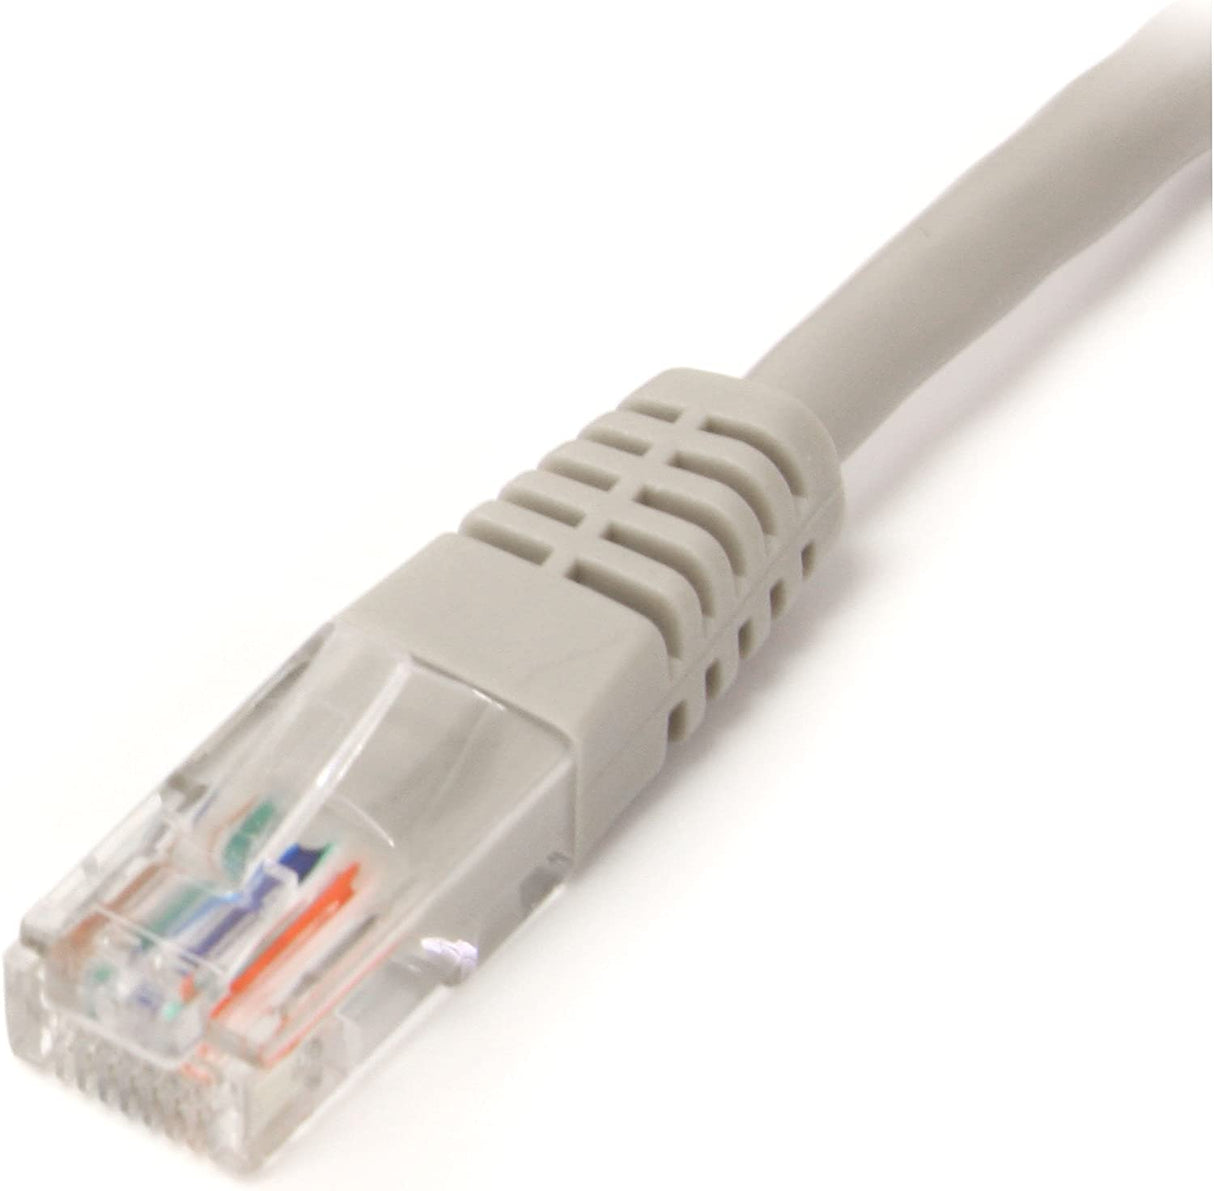 StarTech.com Cat5e Ethernet Cable - 20 ft - Gray - Patch Cable - Molded Cat5e Cable - Network Cable - Ethernet Cord - Cat 5e Cable - 20ft (M45PATCH20GR), Grey 20 ft / 6m Grey